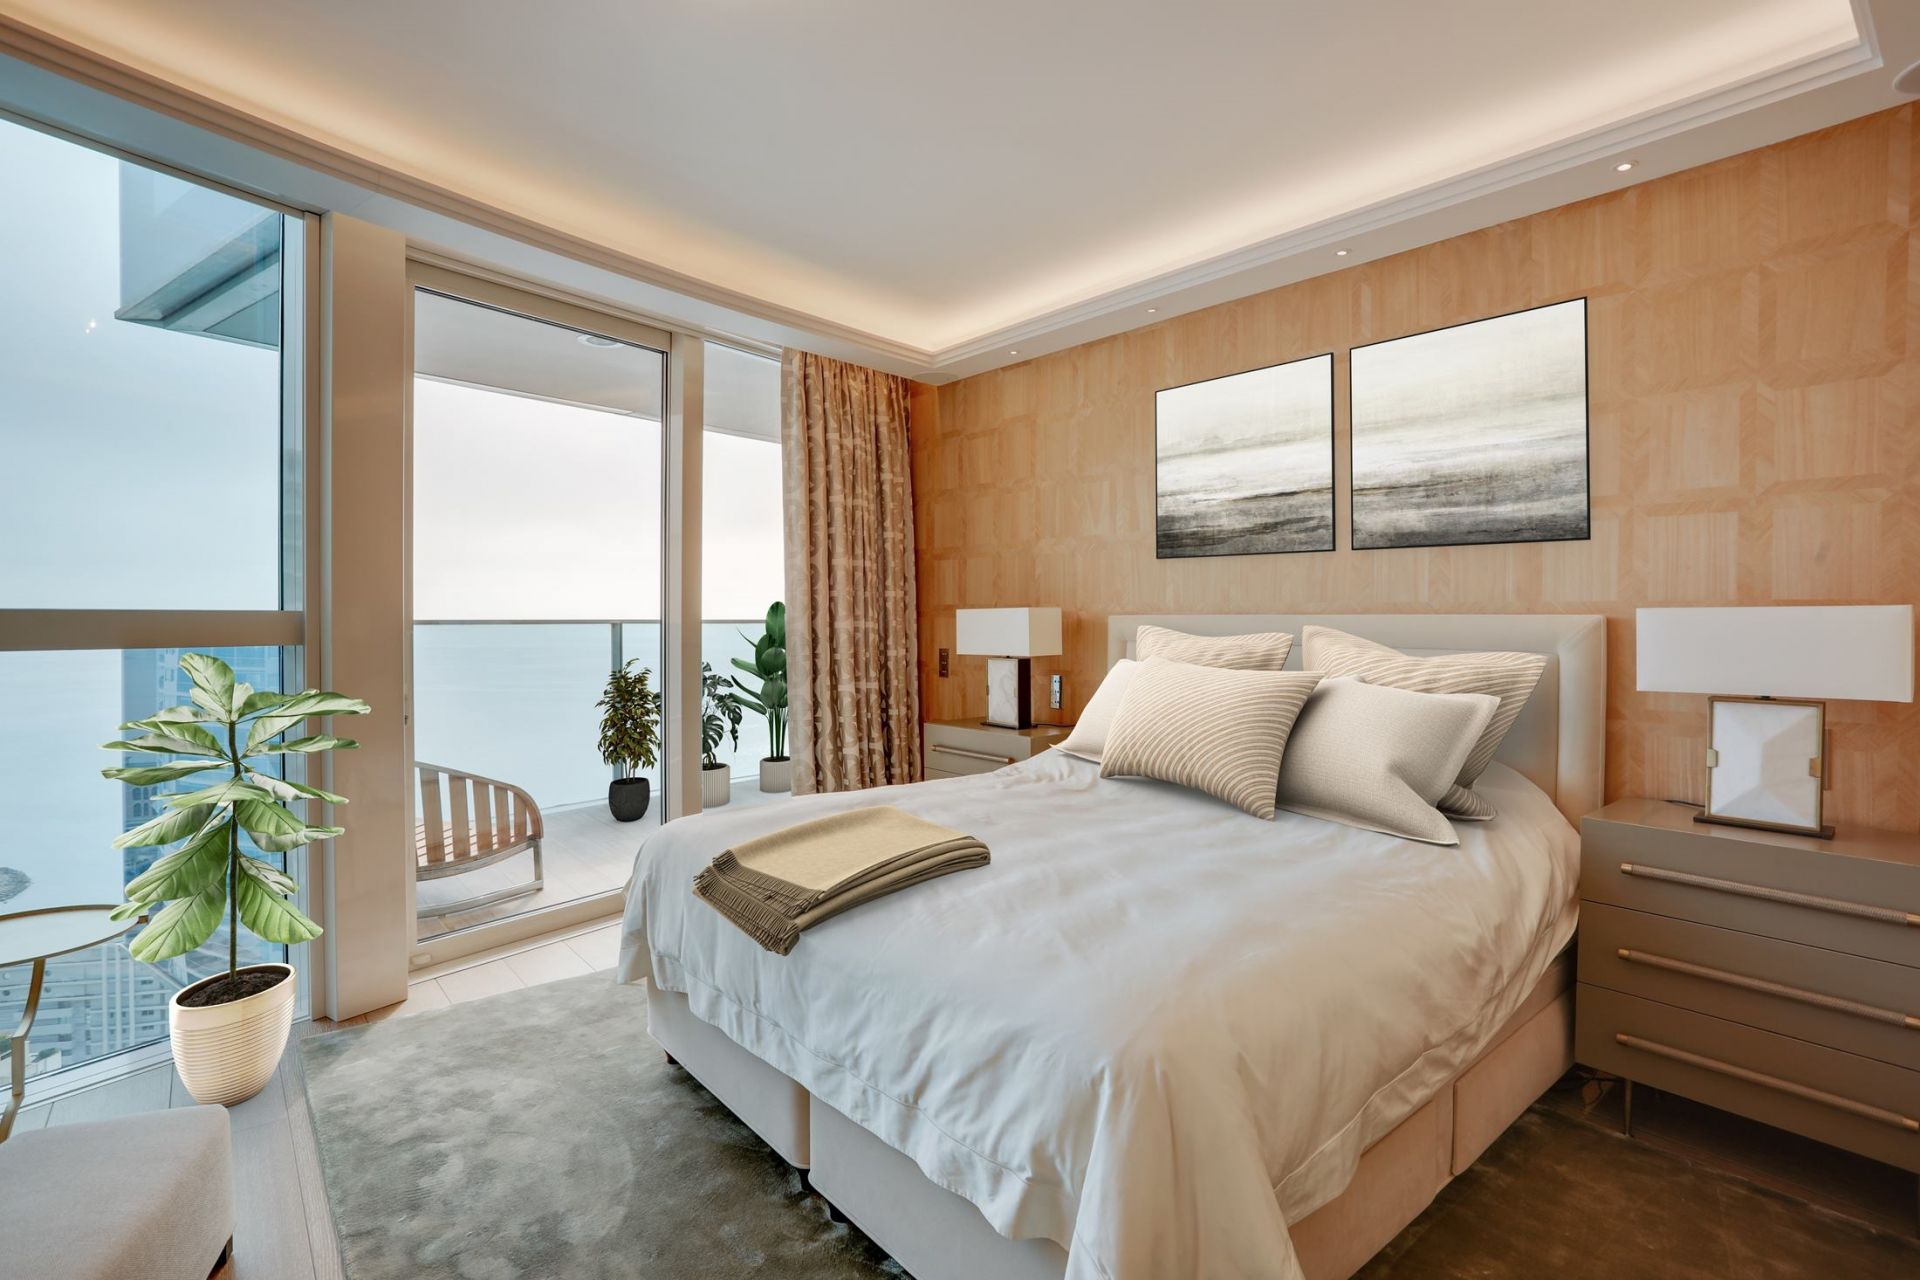 Vente Appartement de luxe Monaco 6 pièces 427.2 m² - Sotheby's